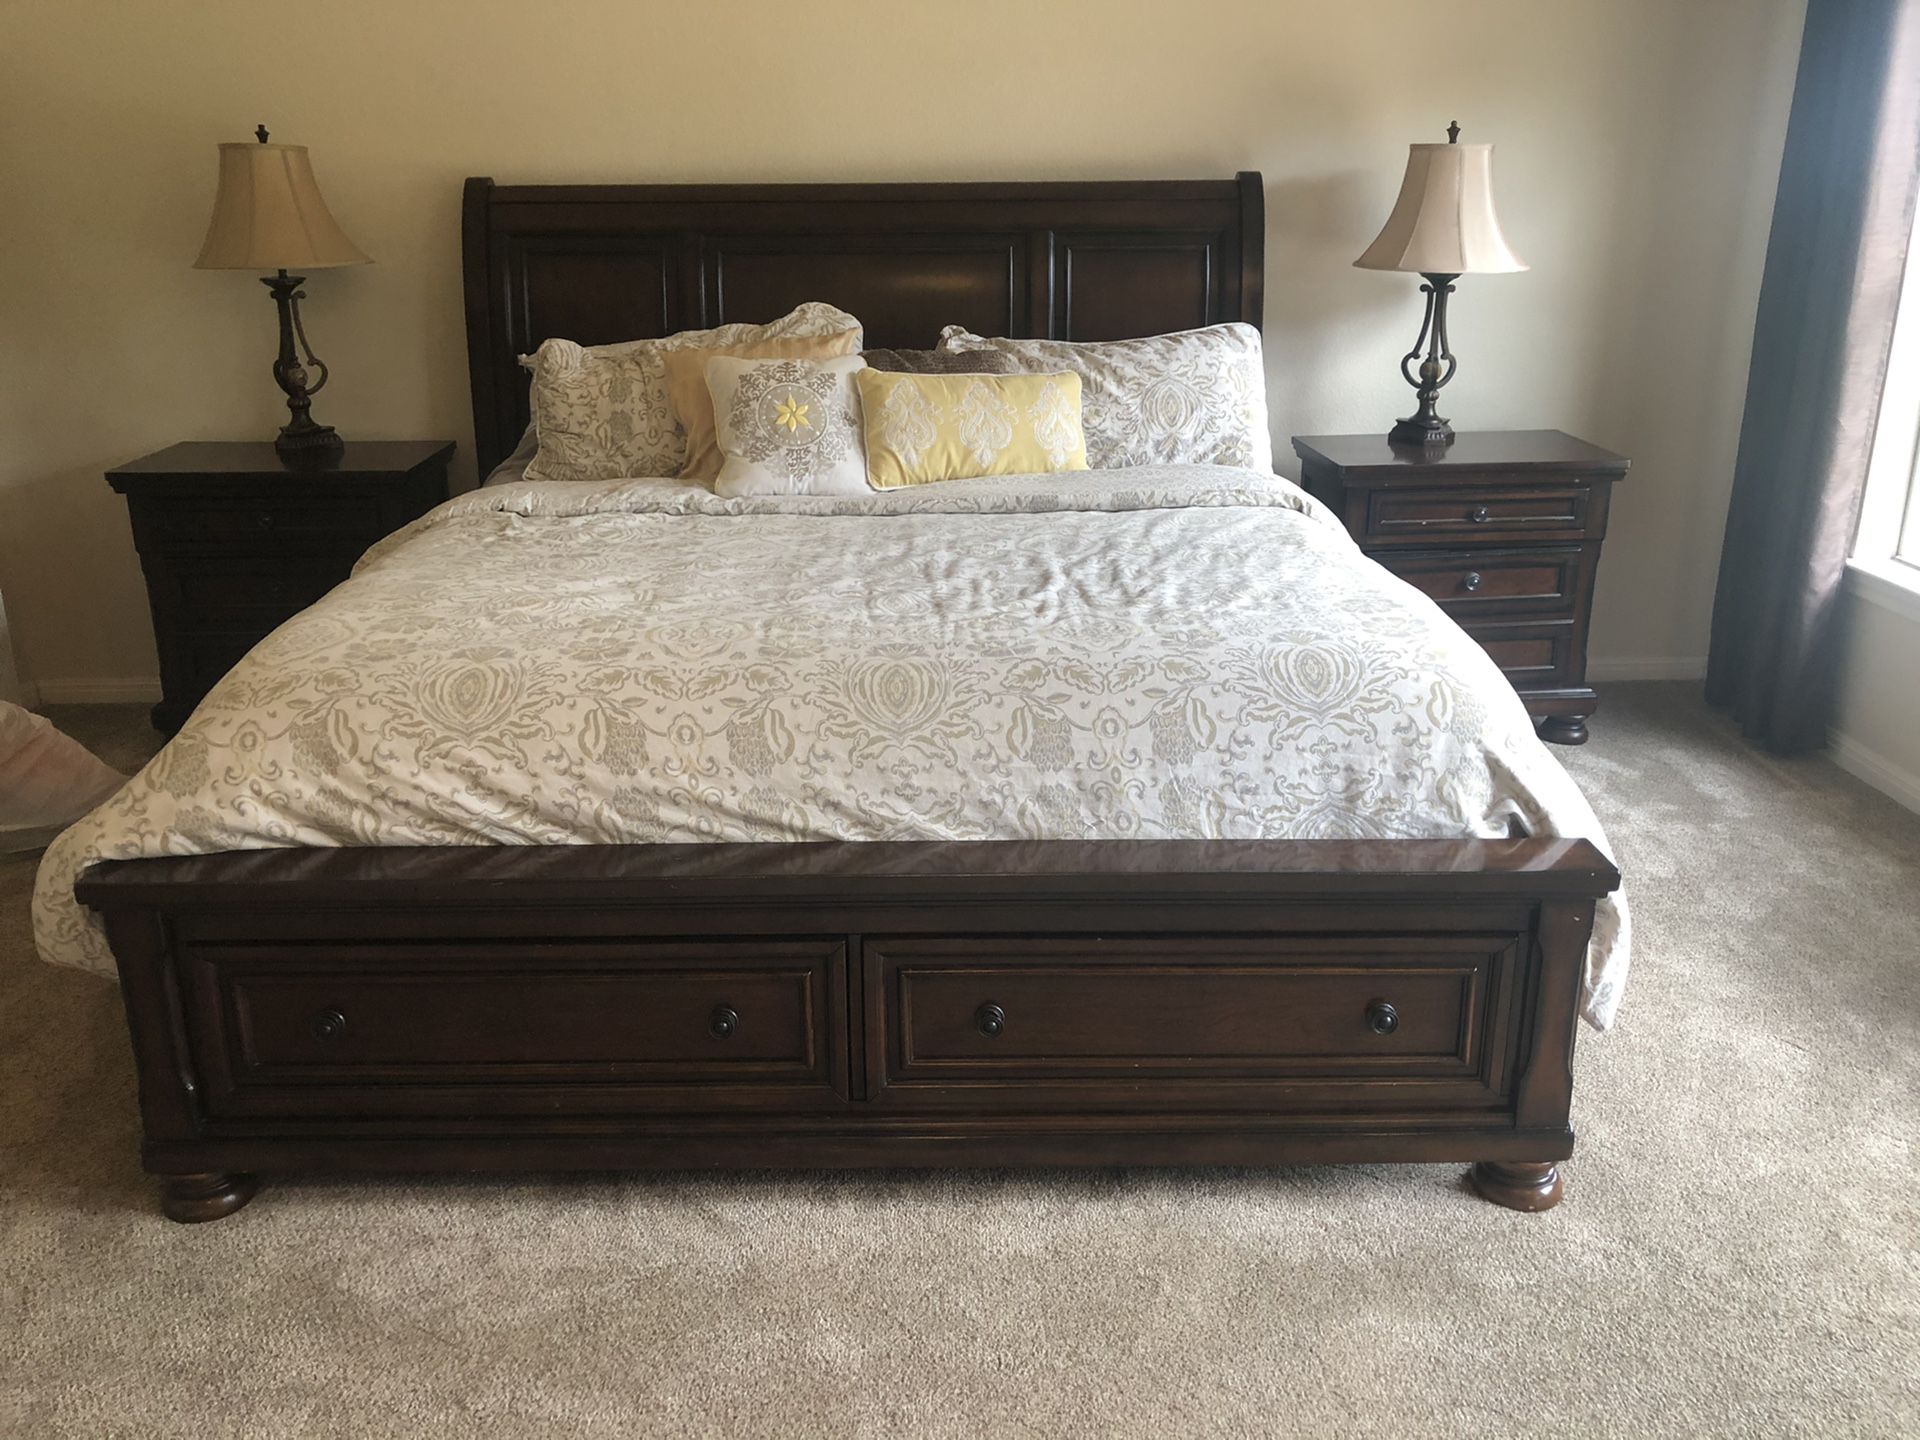 King Bedroom Furniture with Tempurpedic Mattress